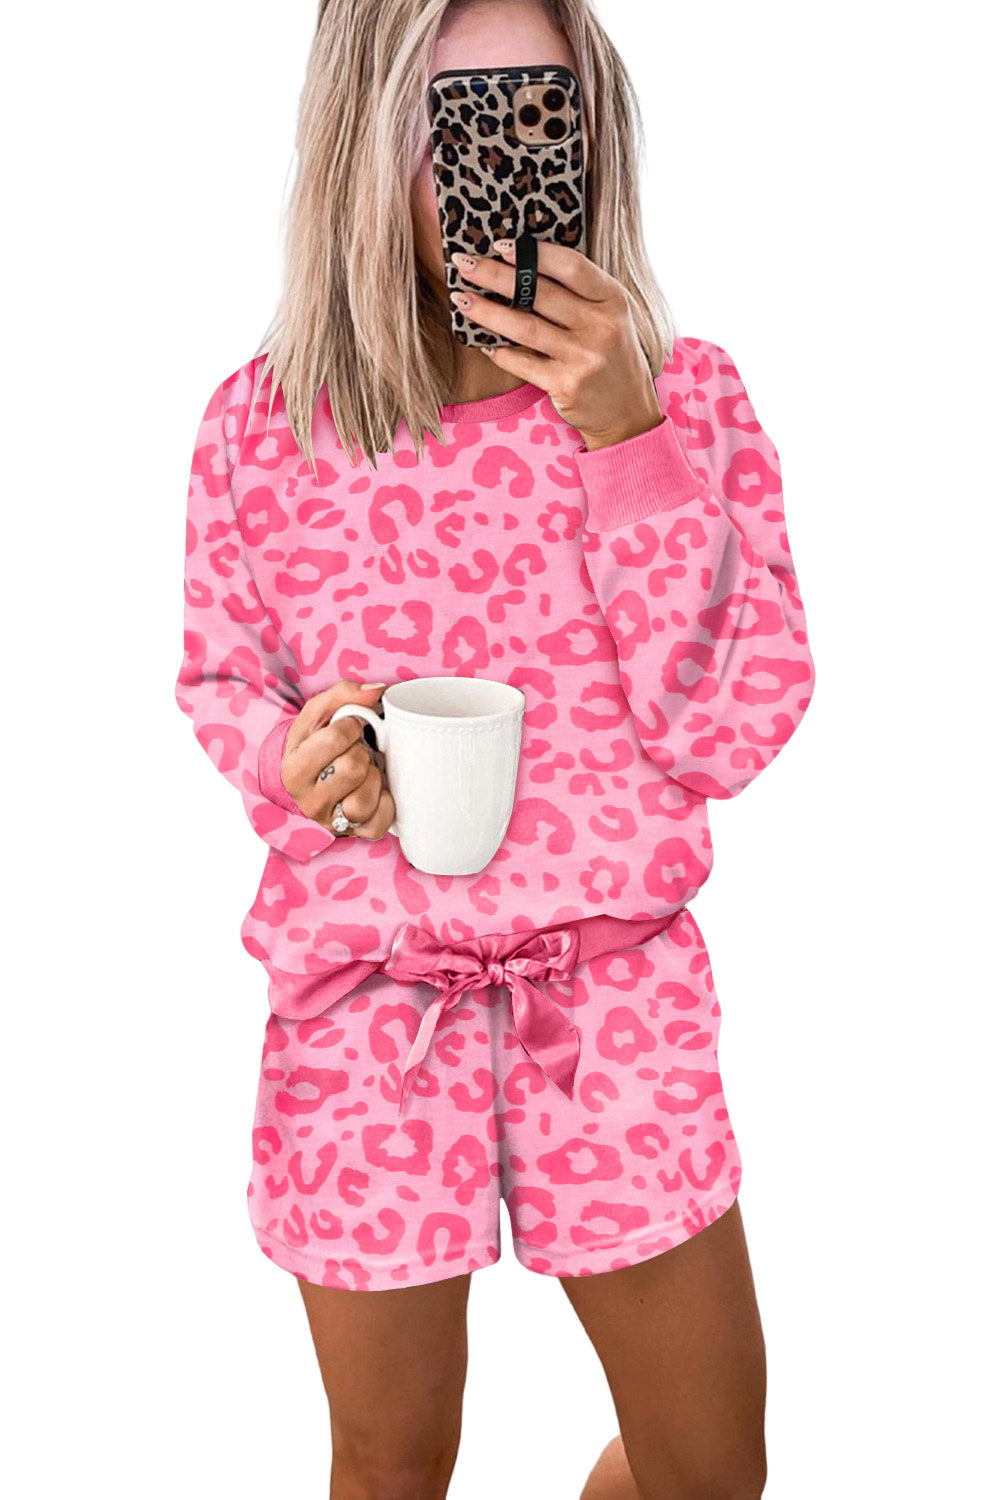 Barbie Style Pink Leopard Long Sleeve Satin Tie Shorts Two Piece Set Loungewear JT's Designer Fashion